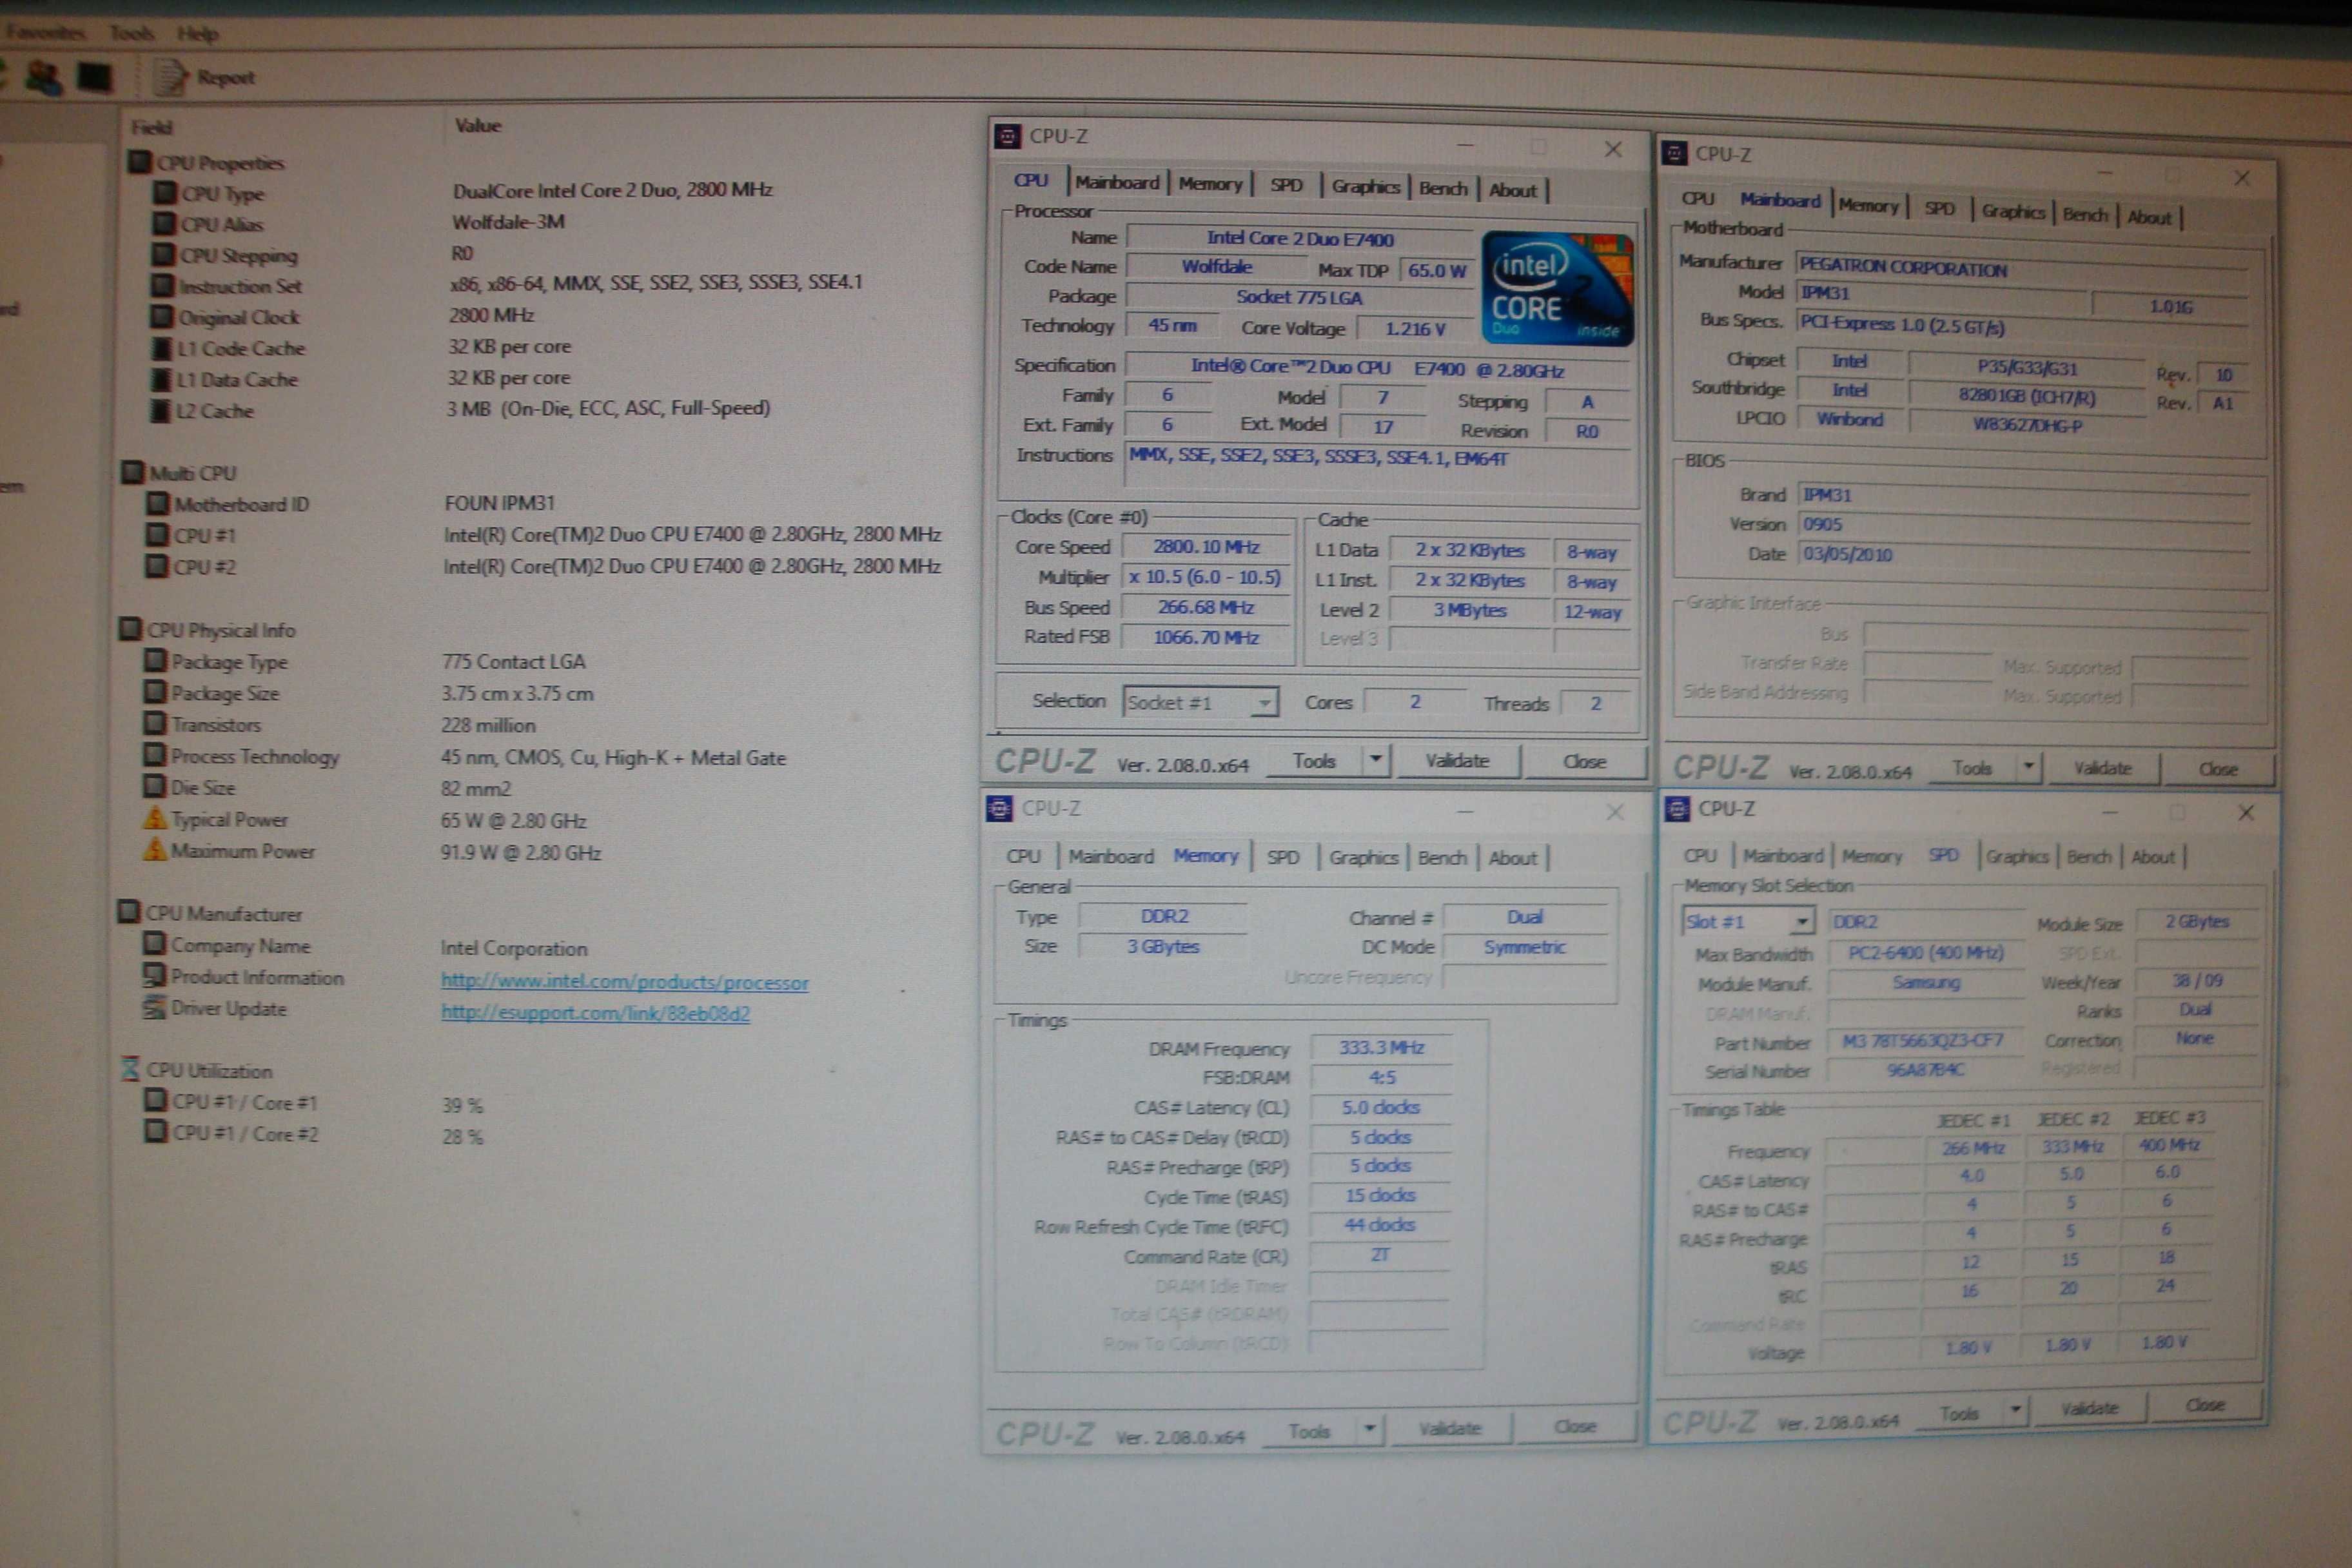 kit intel placa de baza pegatron IPM31 procesor 2.8ghz 3gb ddr2 cooler